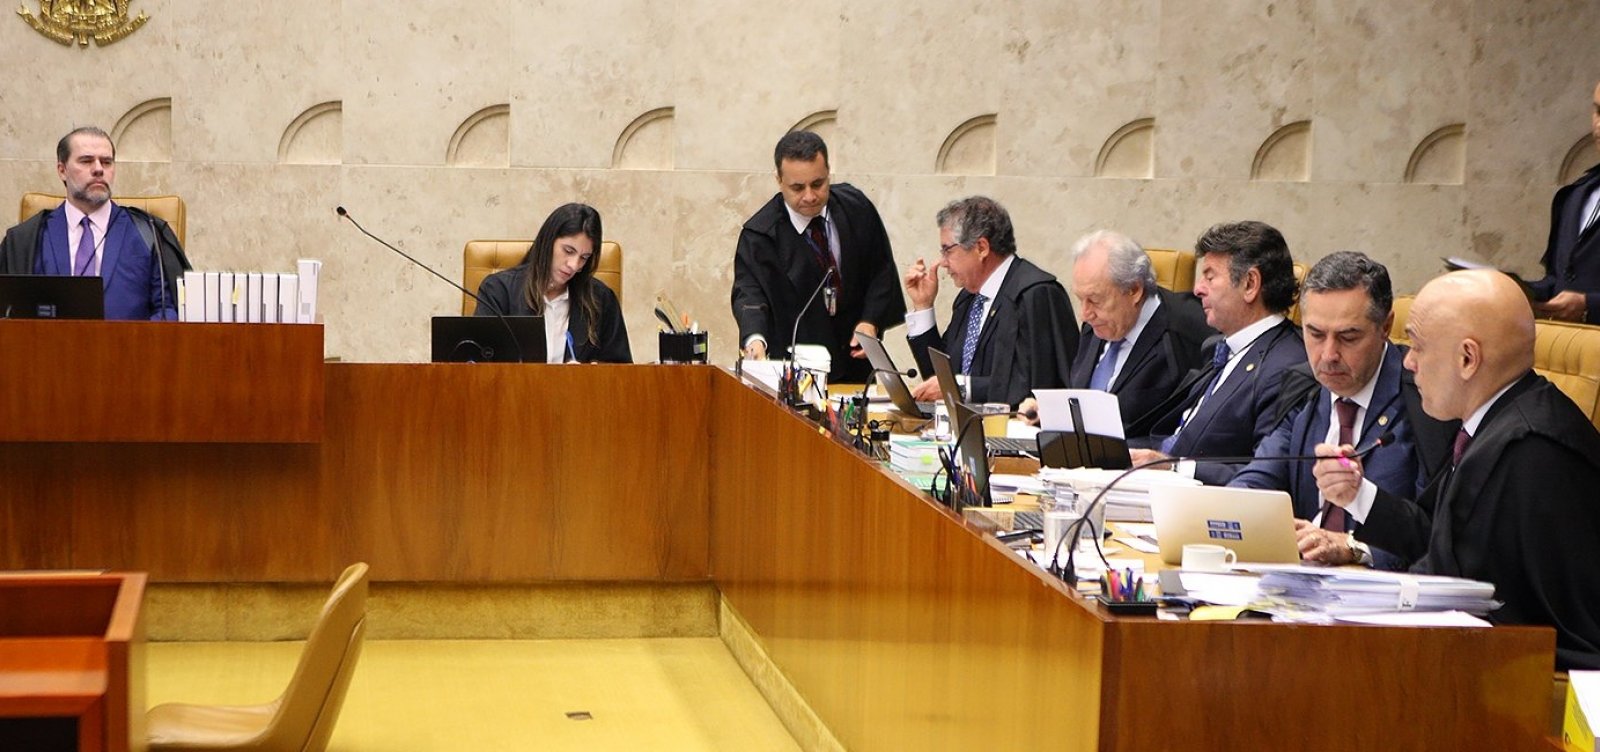 Ministros do STF se surpreenderam com pedido de Flavio Bolsonaro, diz colunista